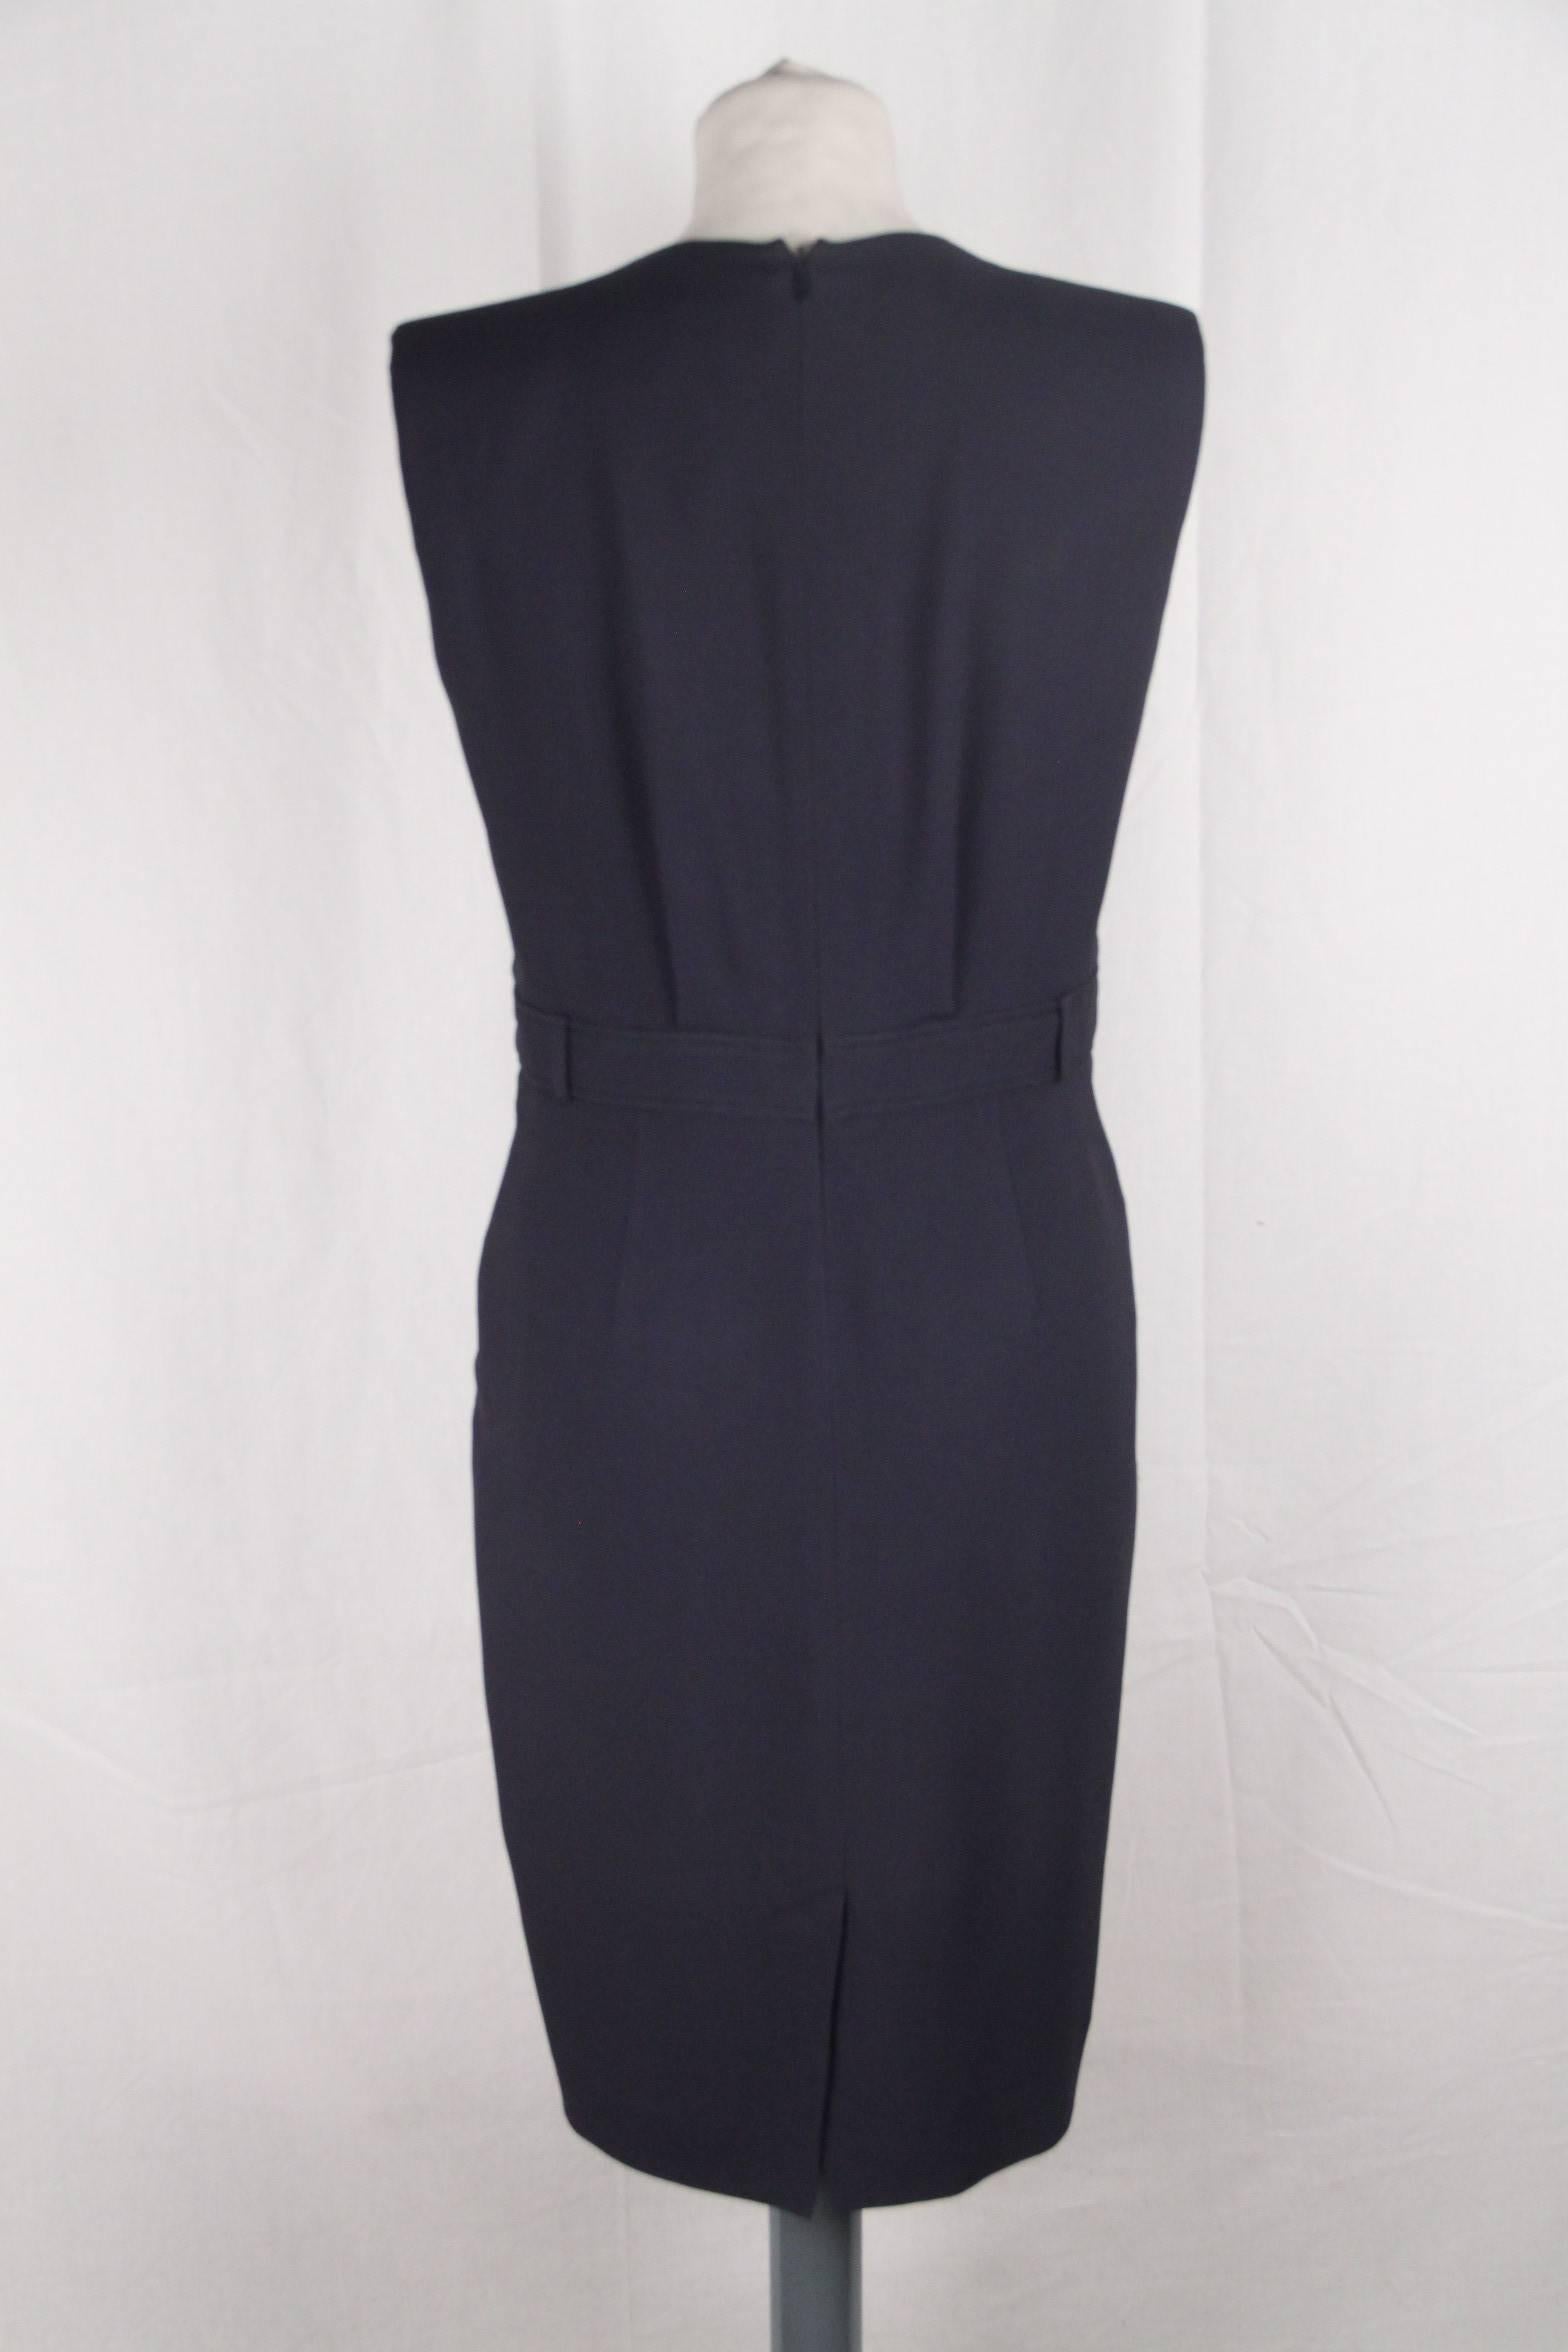 Black Hermes Sleeveless Size 6 Navy Blue Sheath Dress 